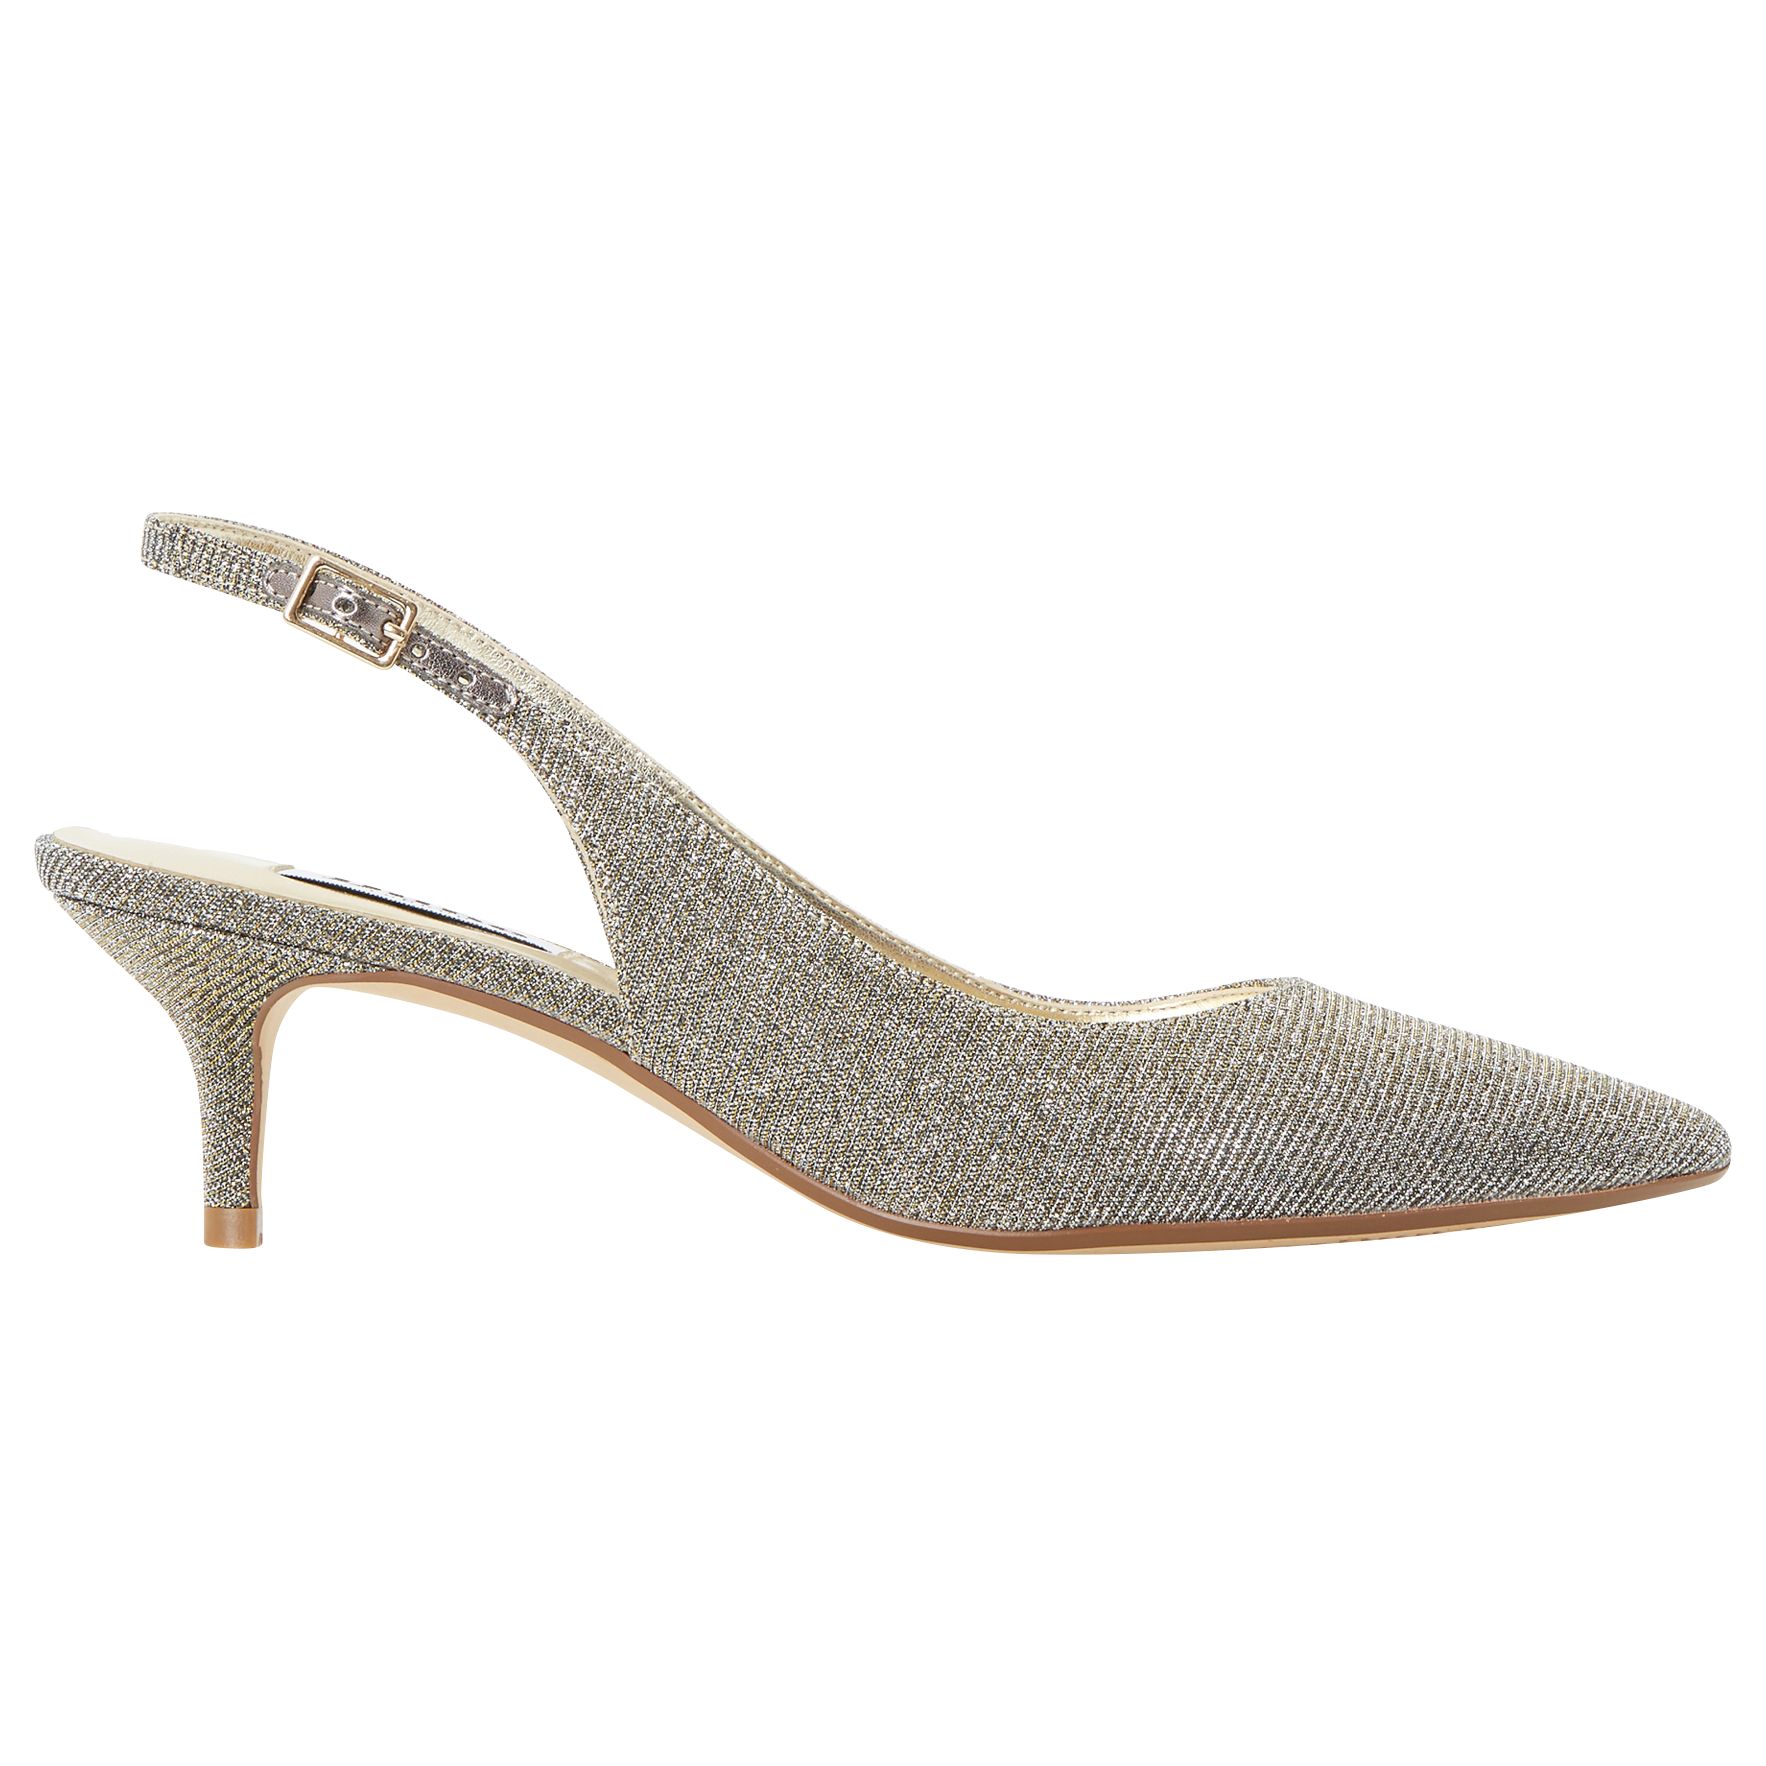 Dune Casandra Kitten Heel Slingback Court Shoes, Gold Fabric, 7